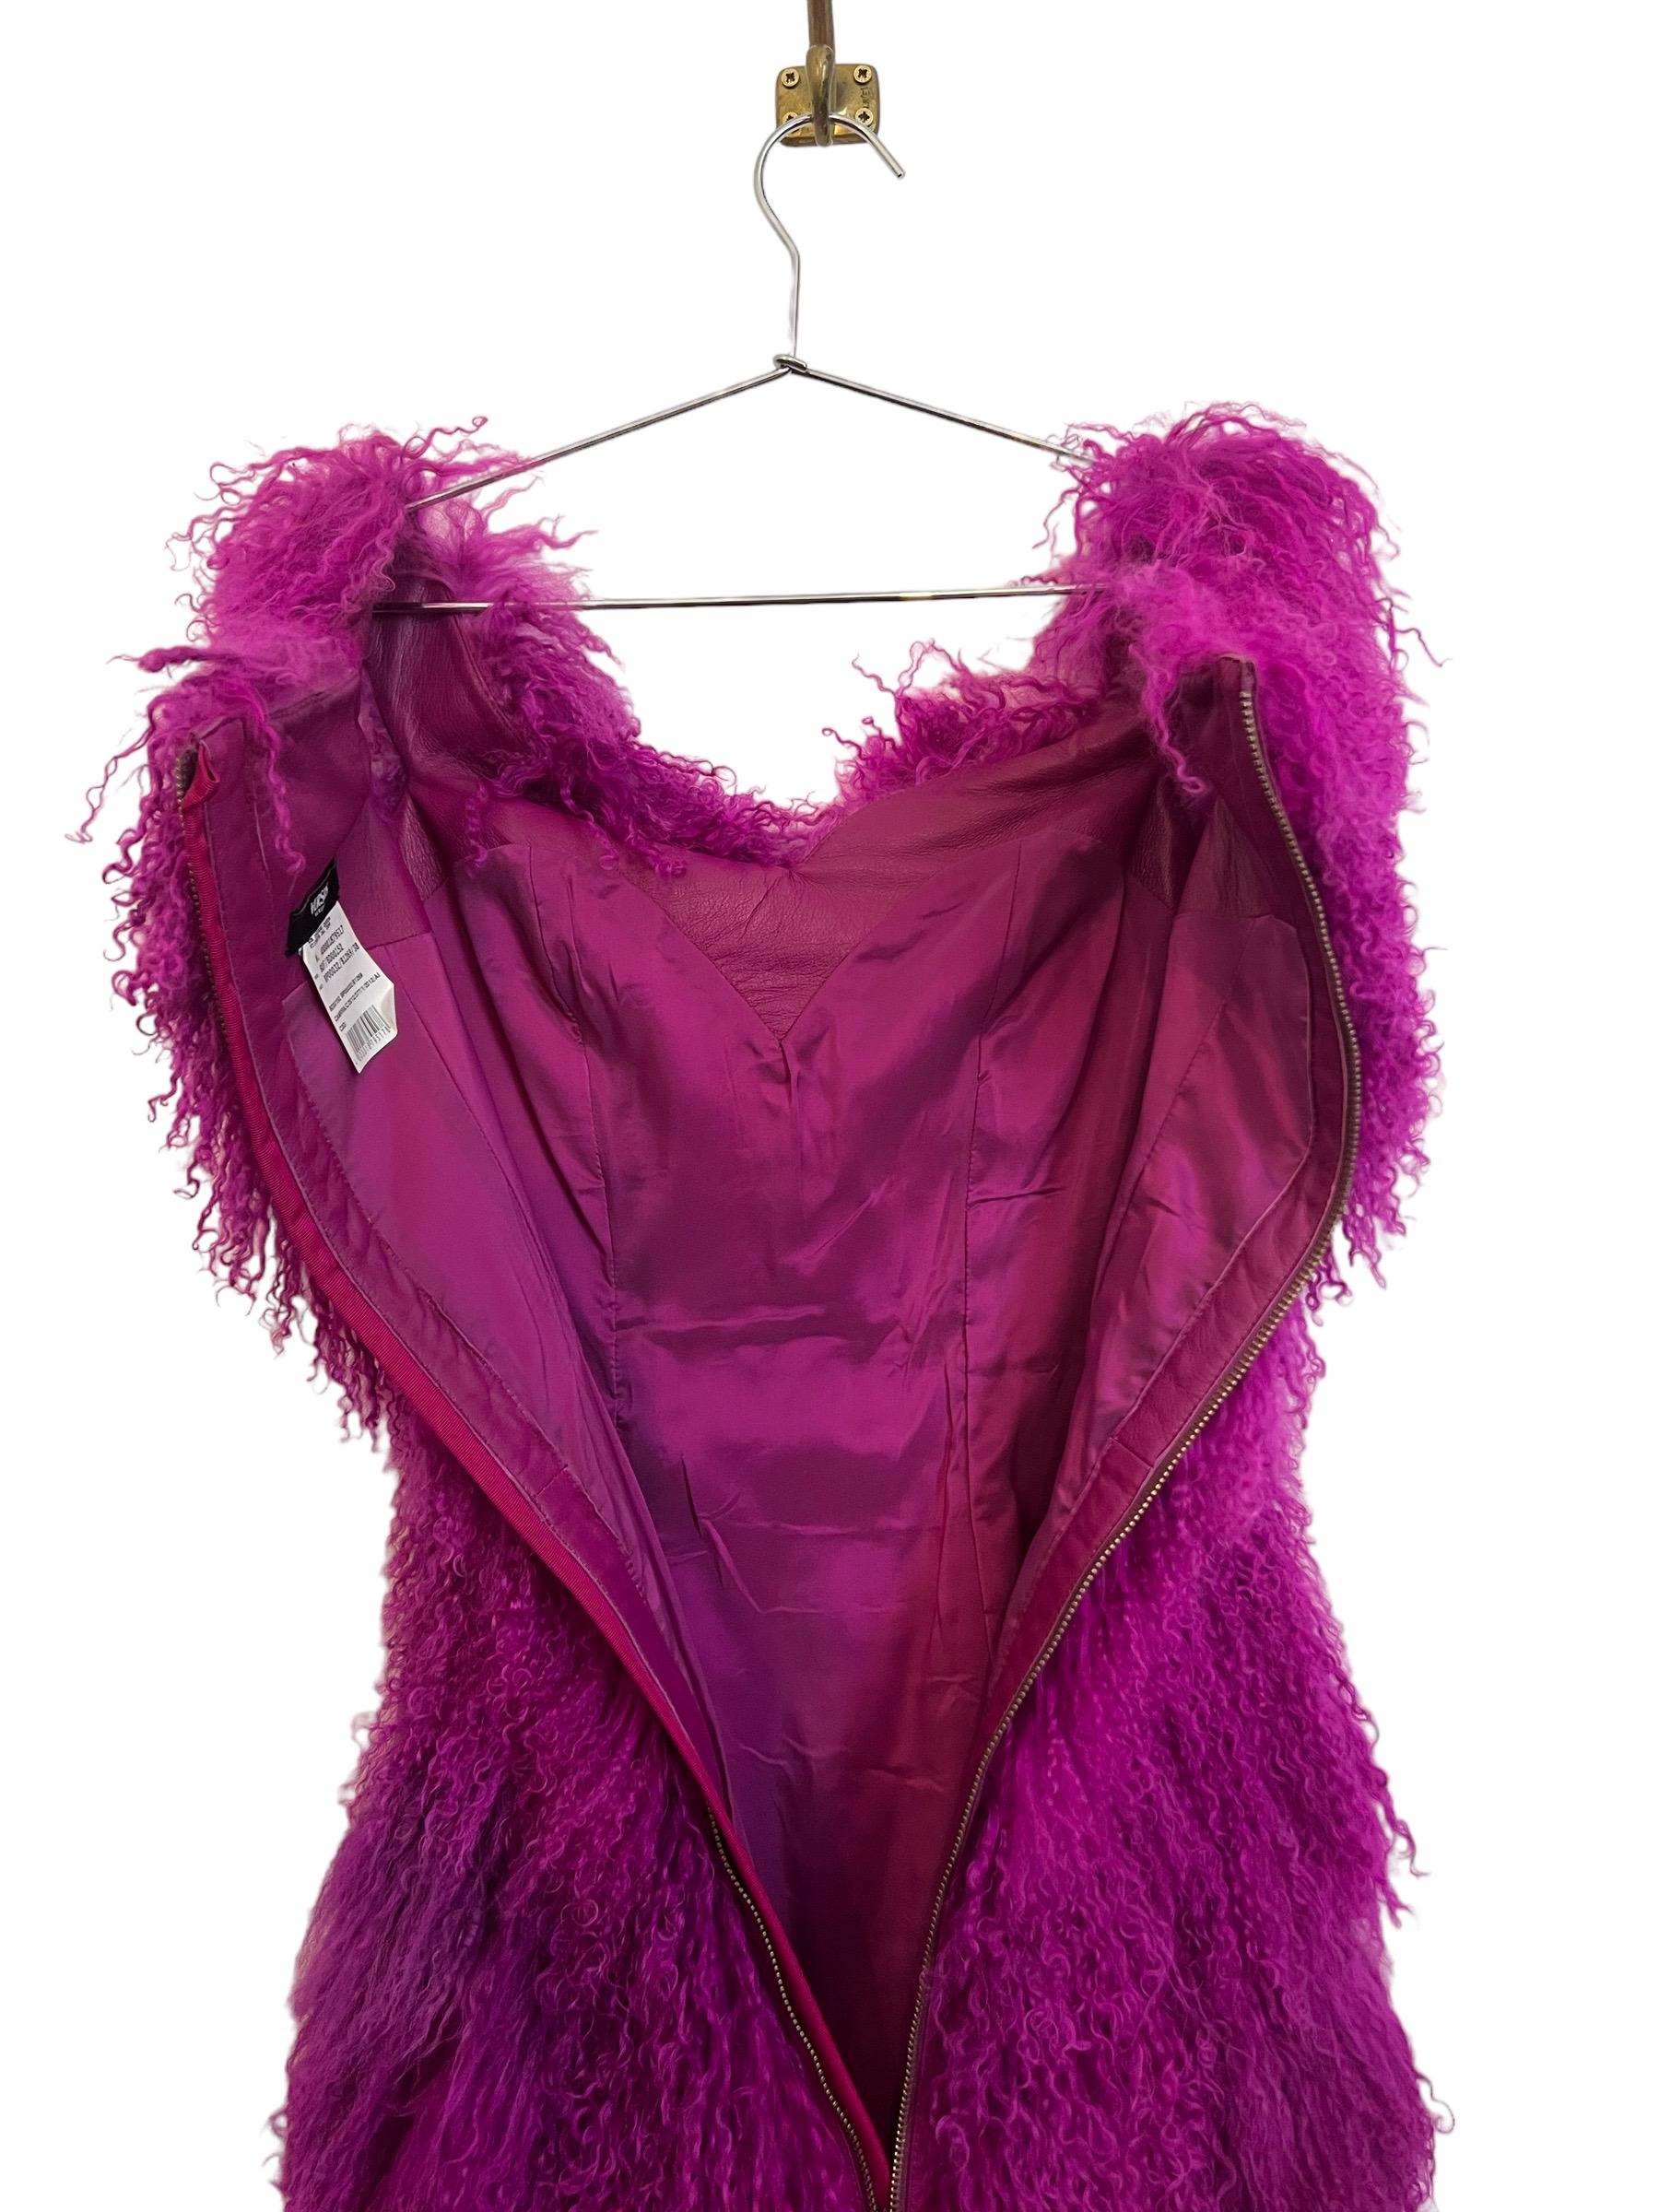 Outrageous VERSUS Versace 2012 Runway Magenta Purple Mongolian Lamb Fur Dress For Sale 7